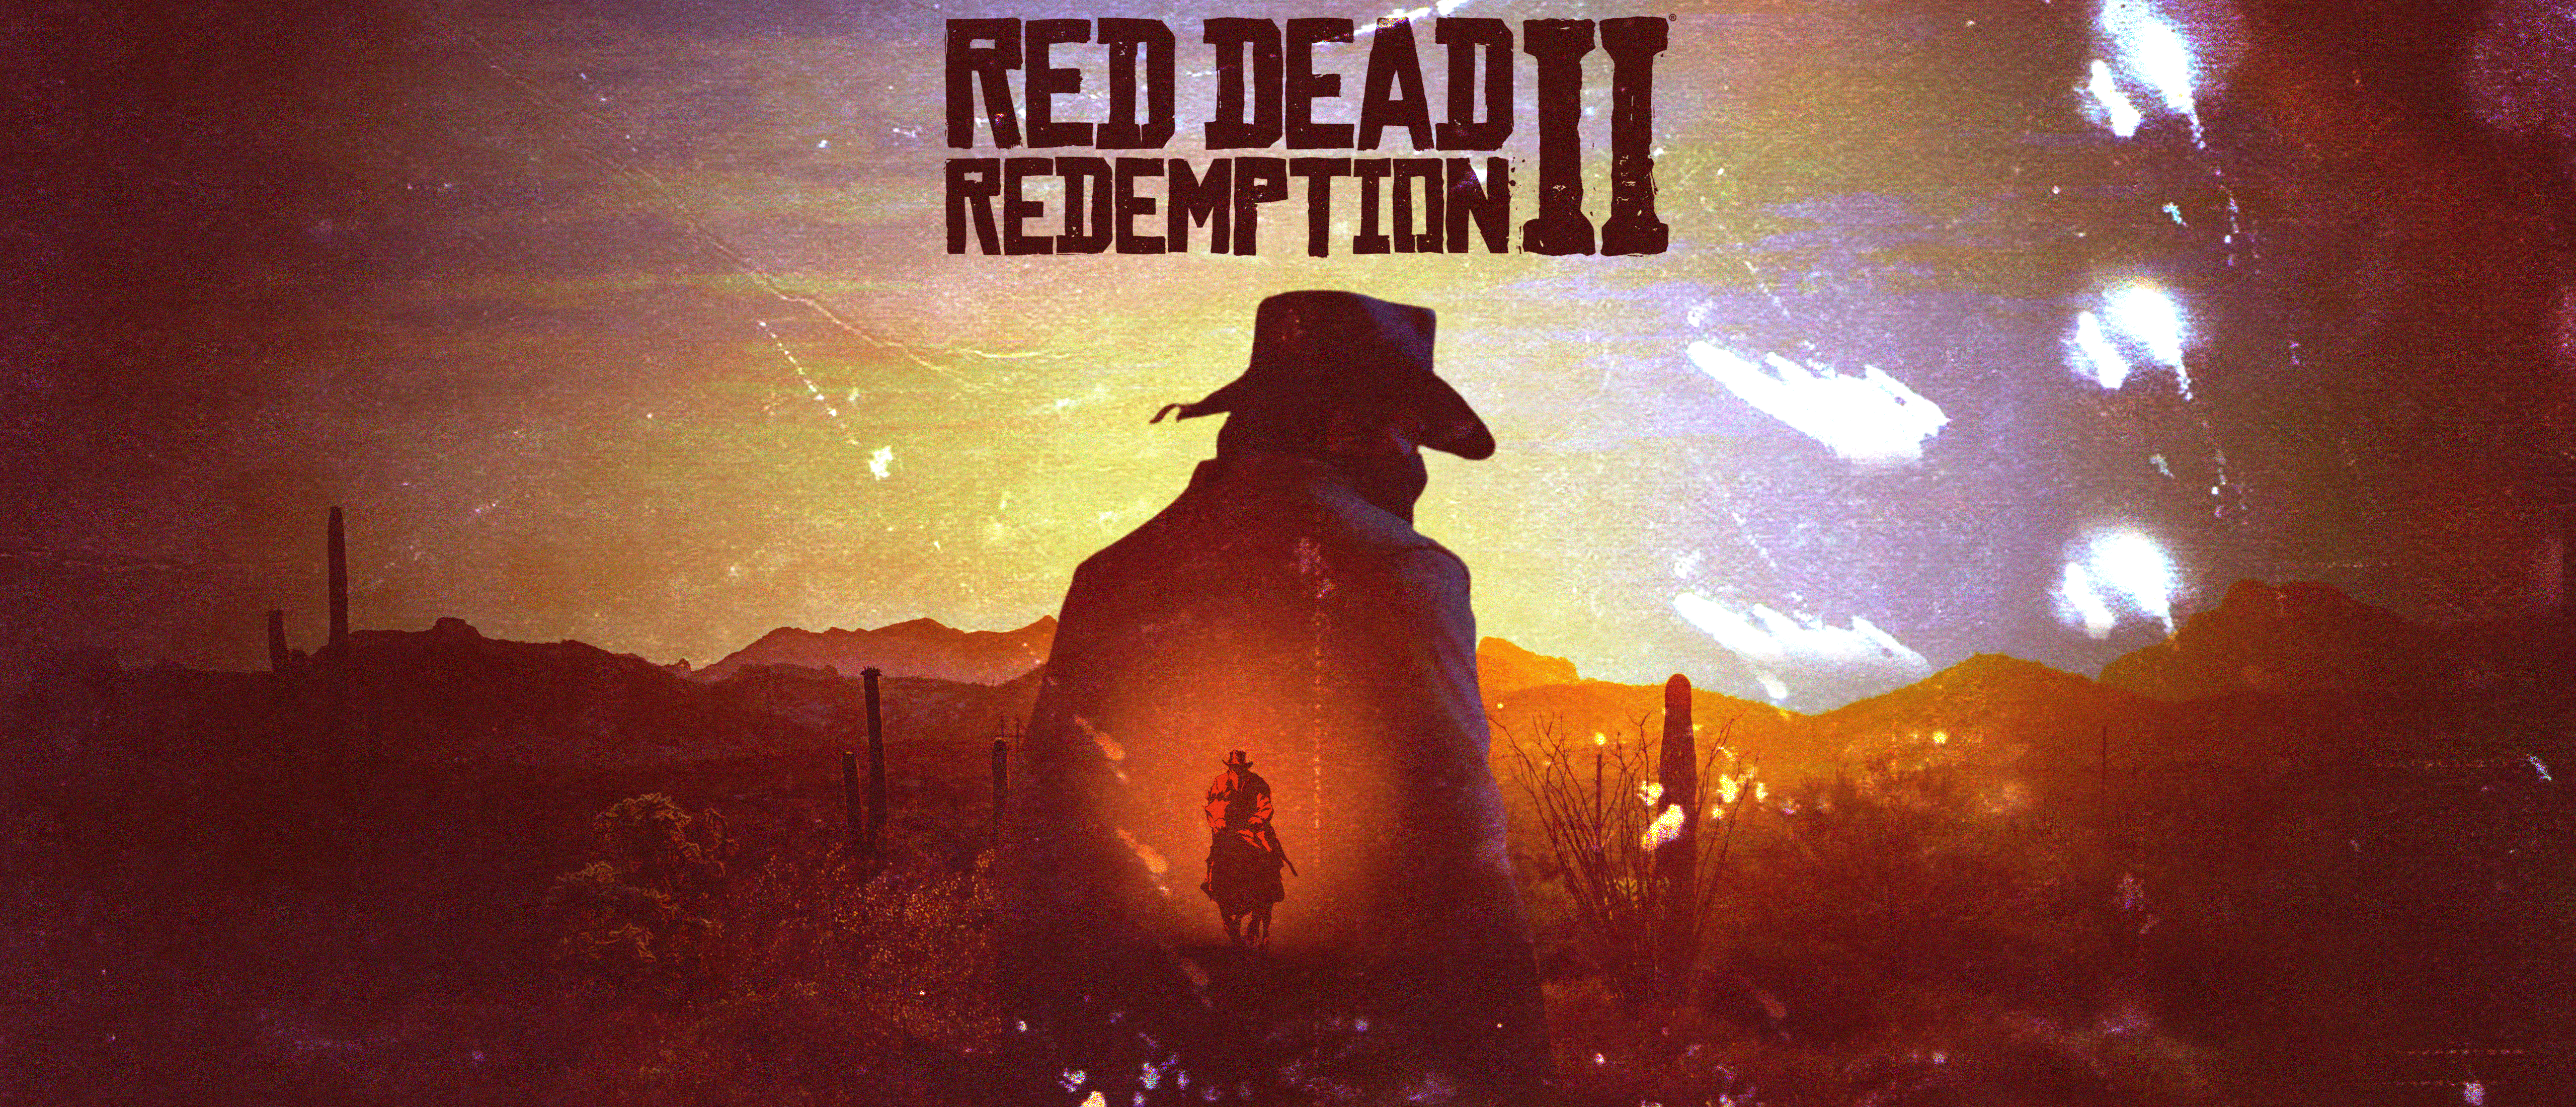 Red Dead Redemption Red Dead Redemption 2 Rockstar Games Arthur Morgan Video Games 5120x2200